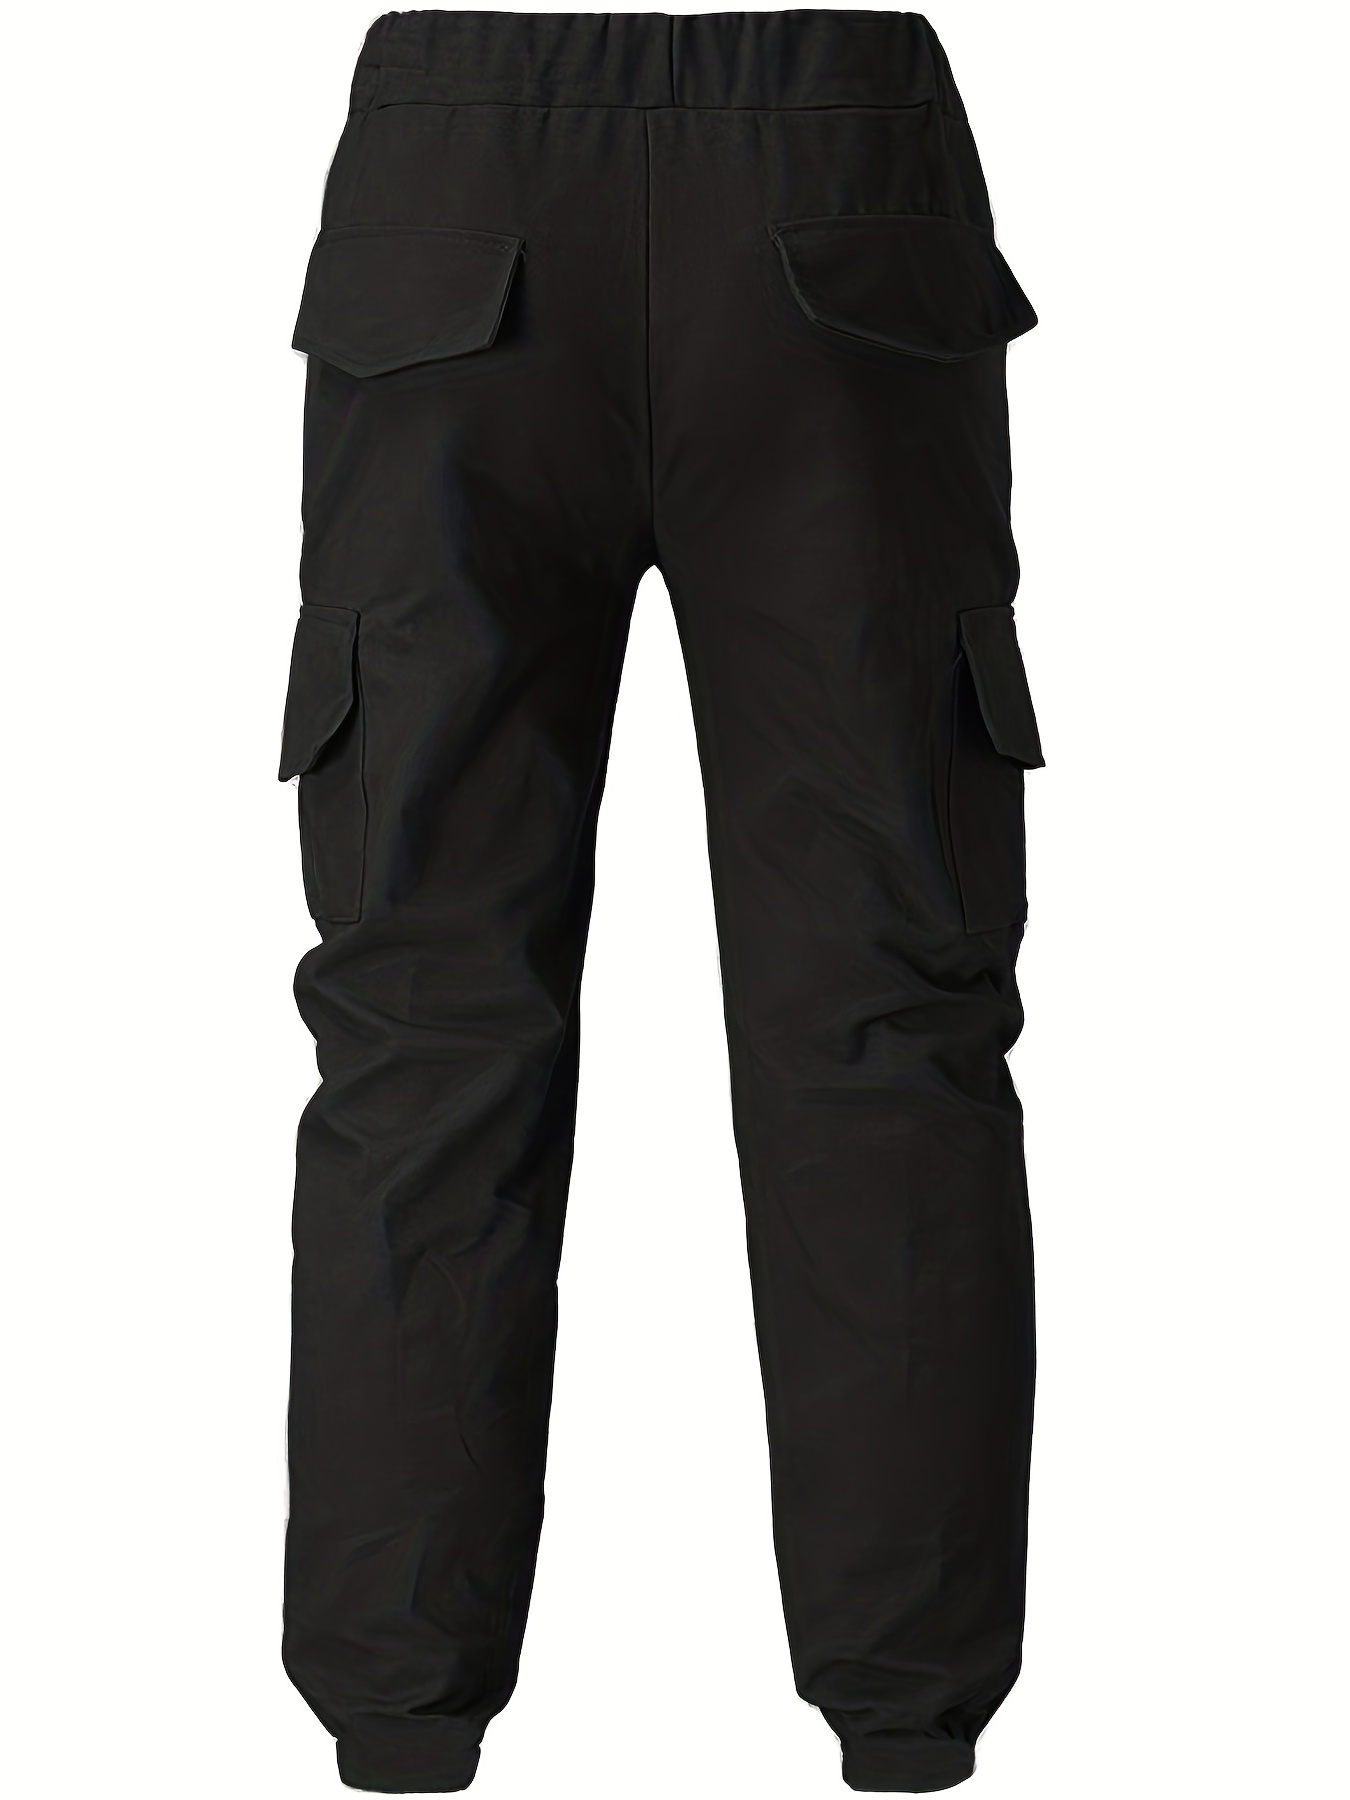 Black Cargo Pants Fashion Mens Solid Drawstring Pocket Sports